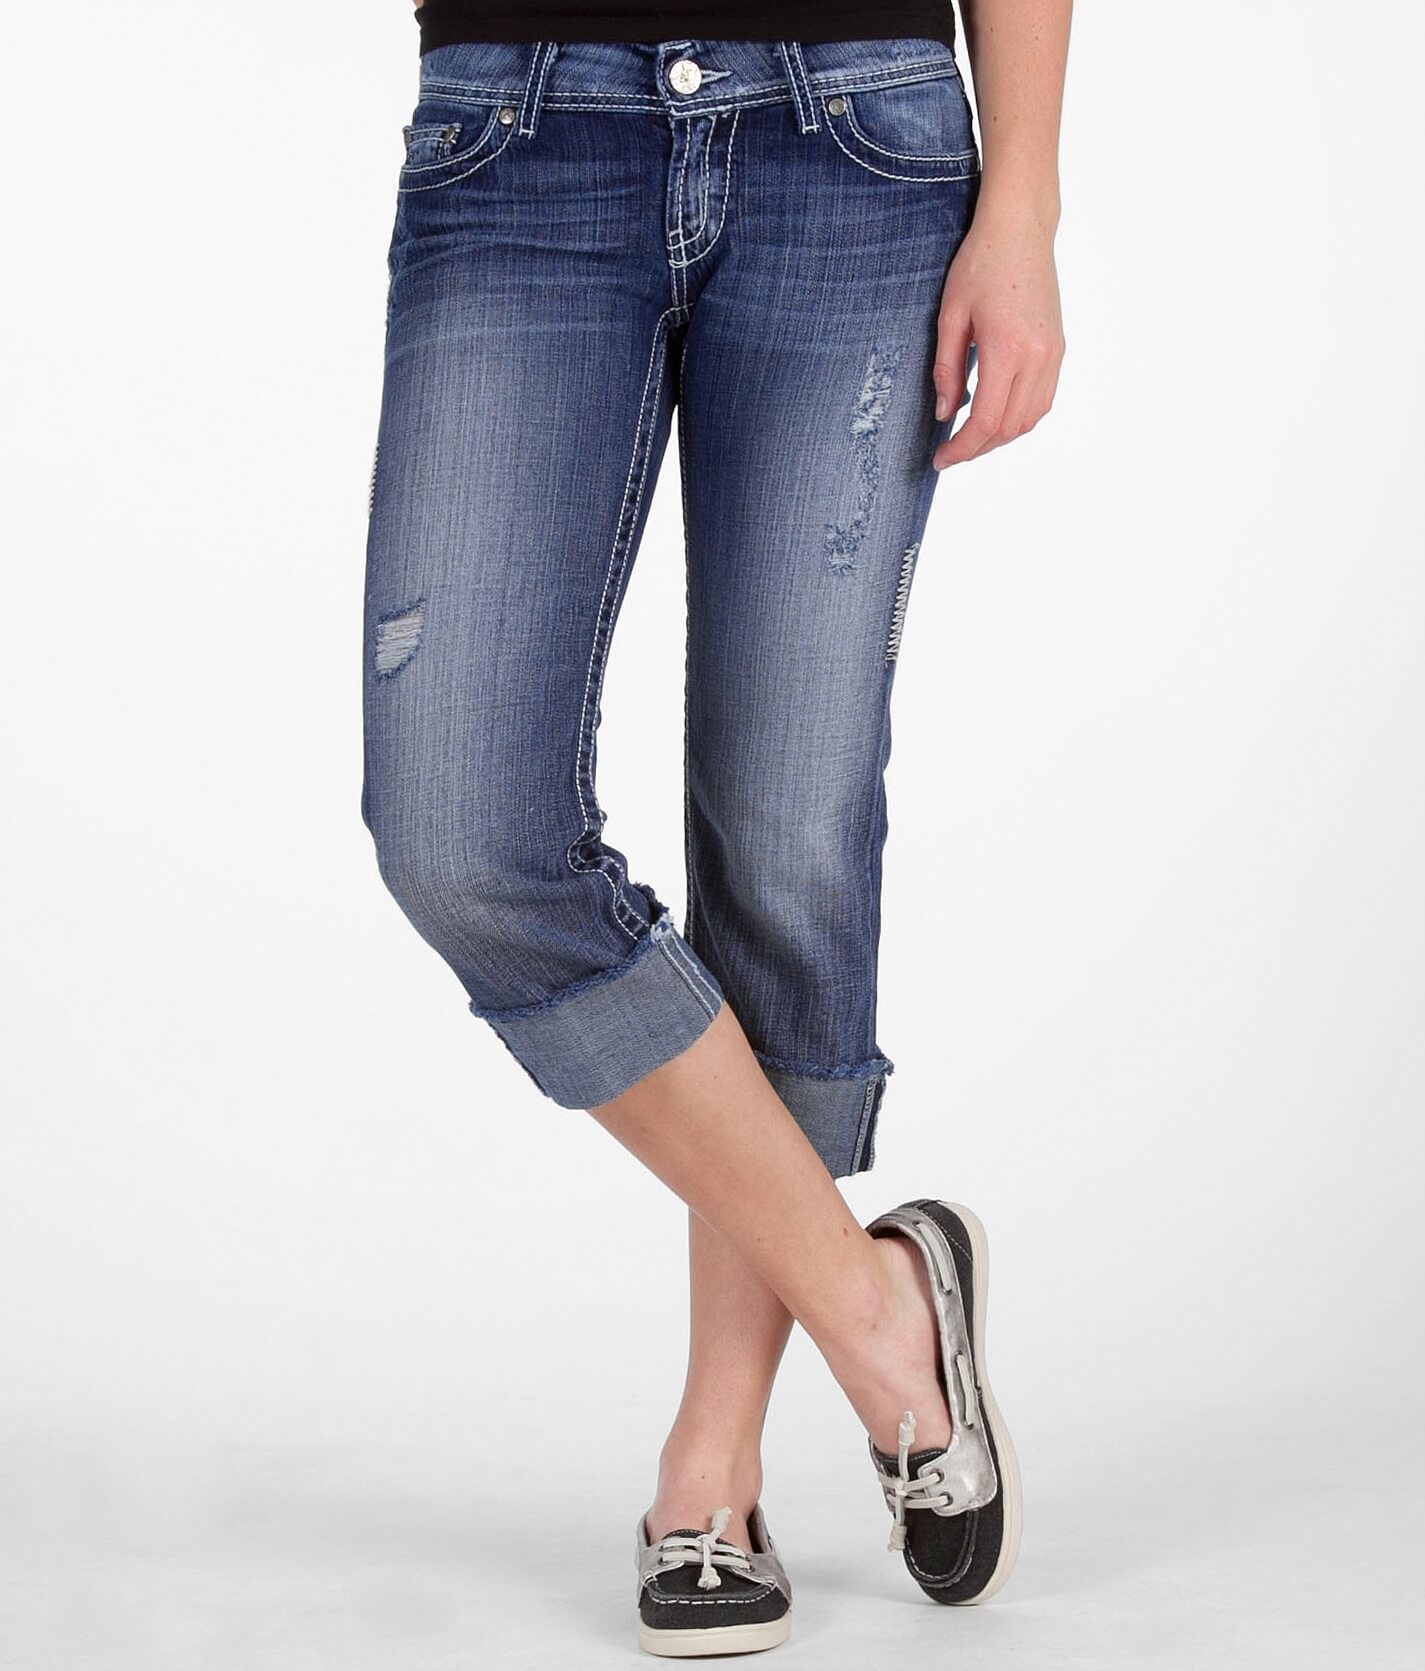 buckle sabrina jeans